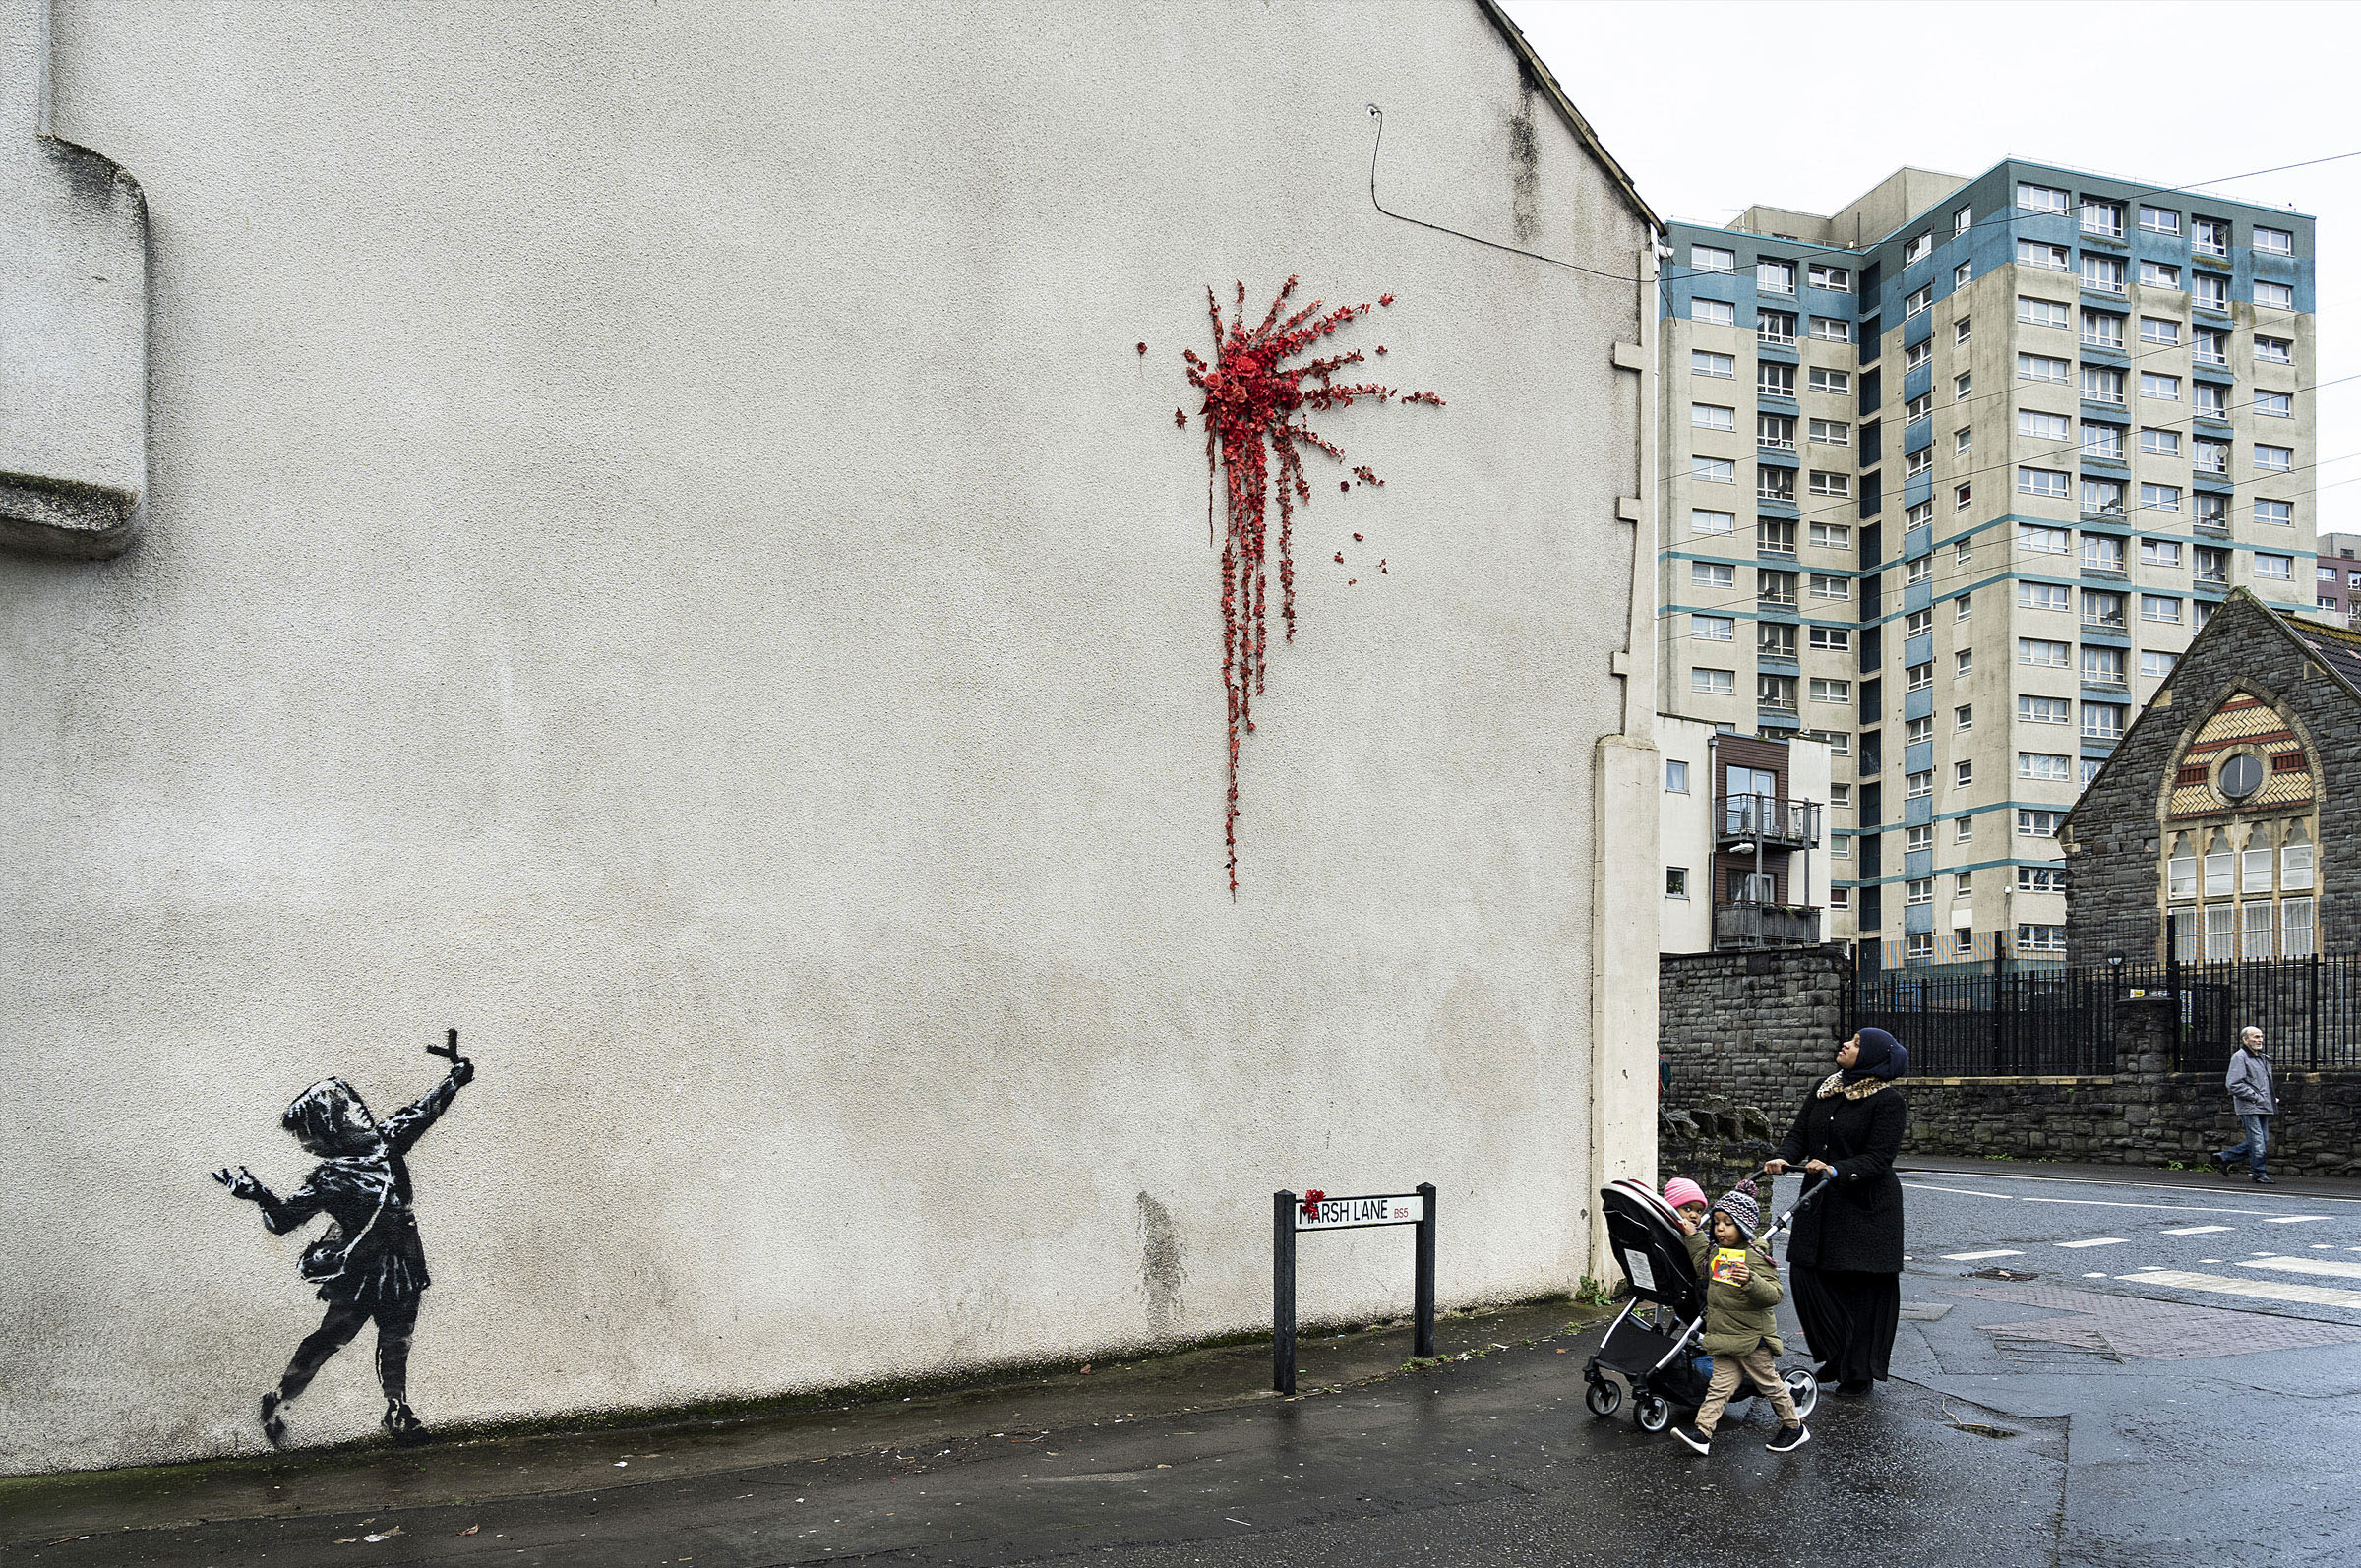 Banksy new street piece on Marsh Lane, Bristol - StreetArtNe